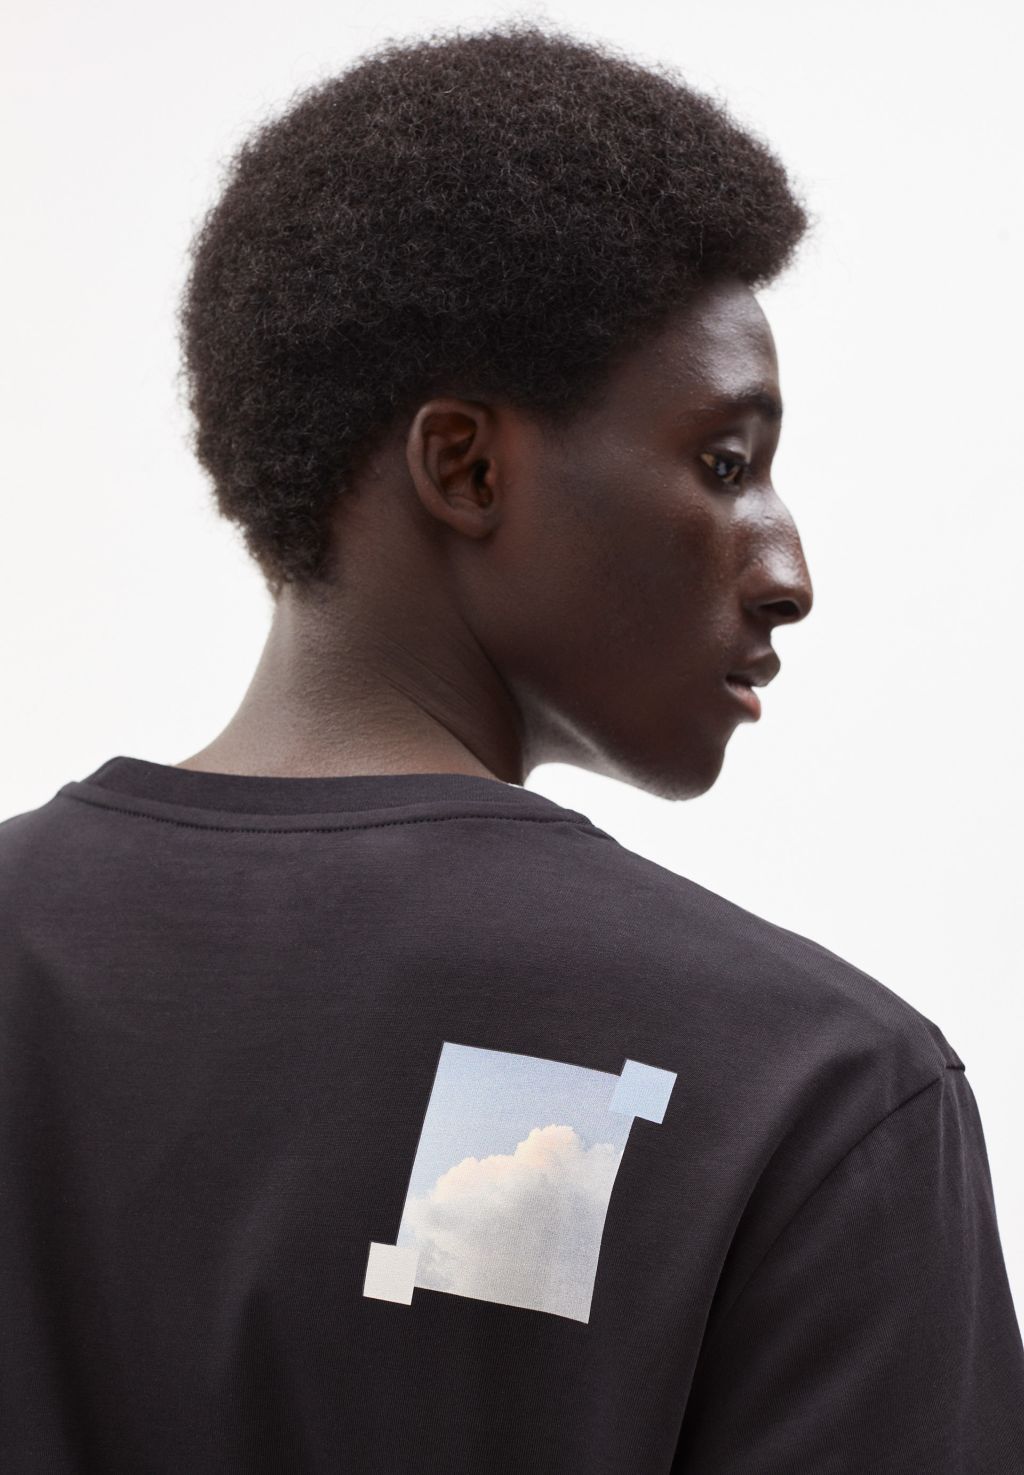 Aado Cloud T-Shirt aus Bio-Baumwolle black XL